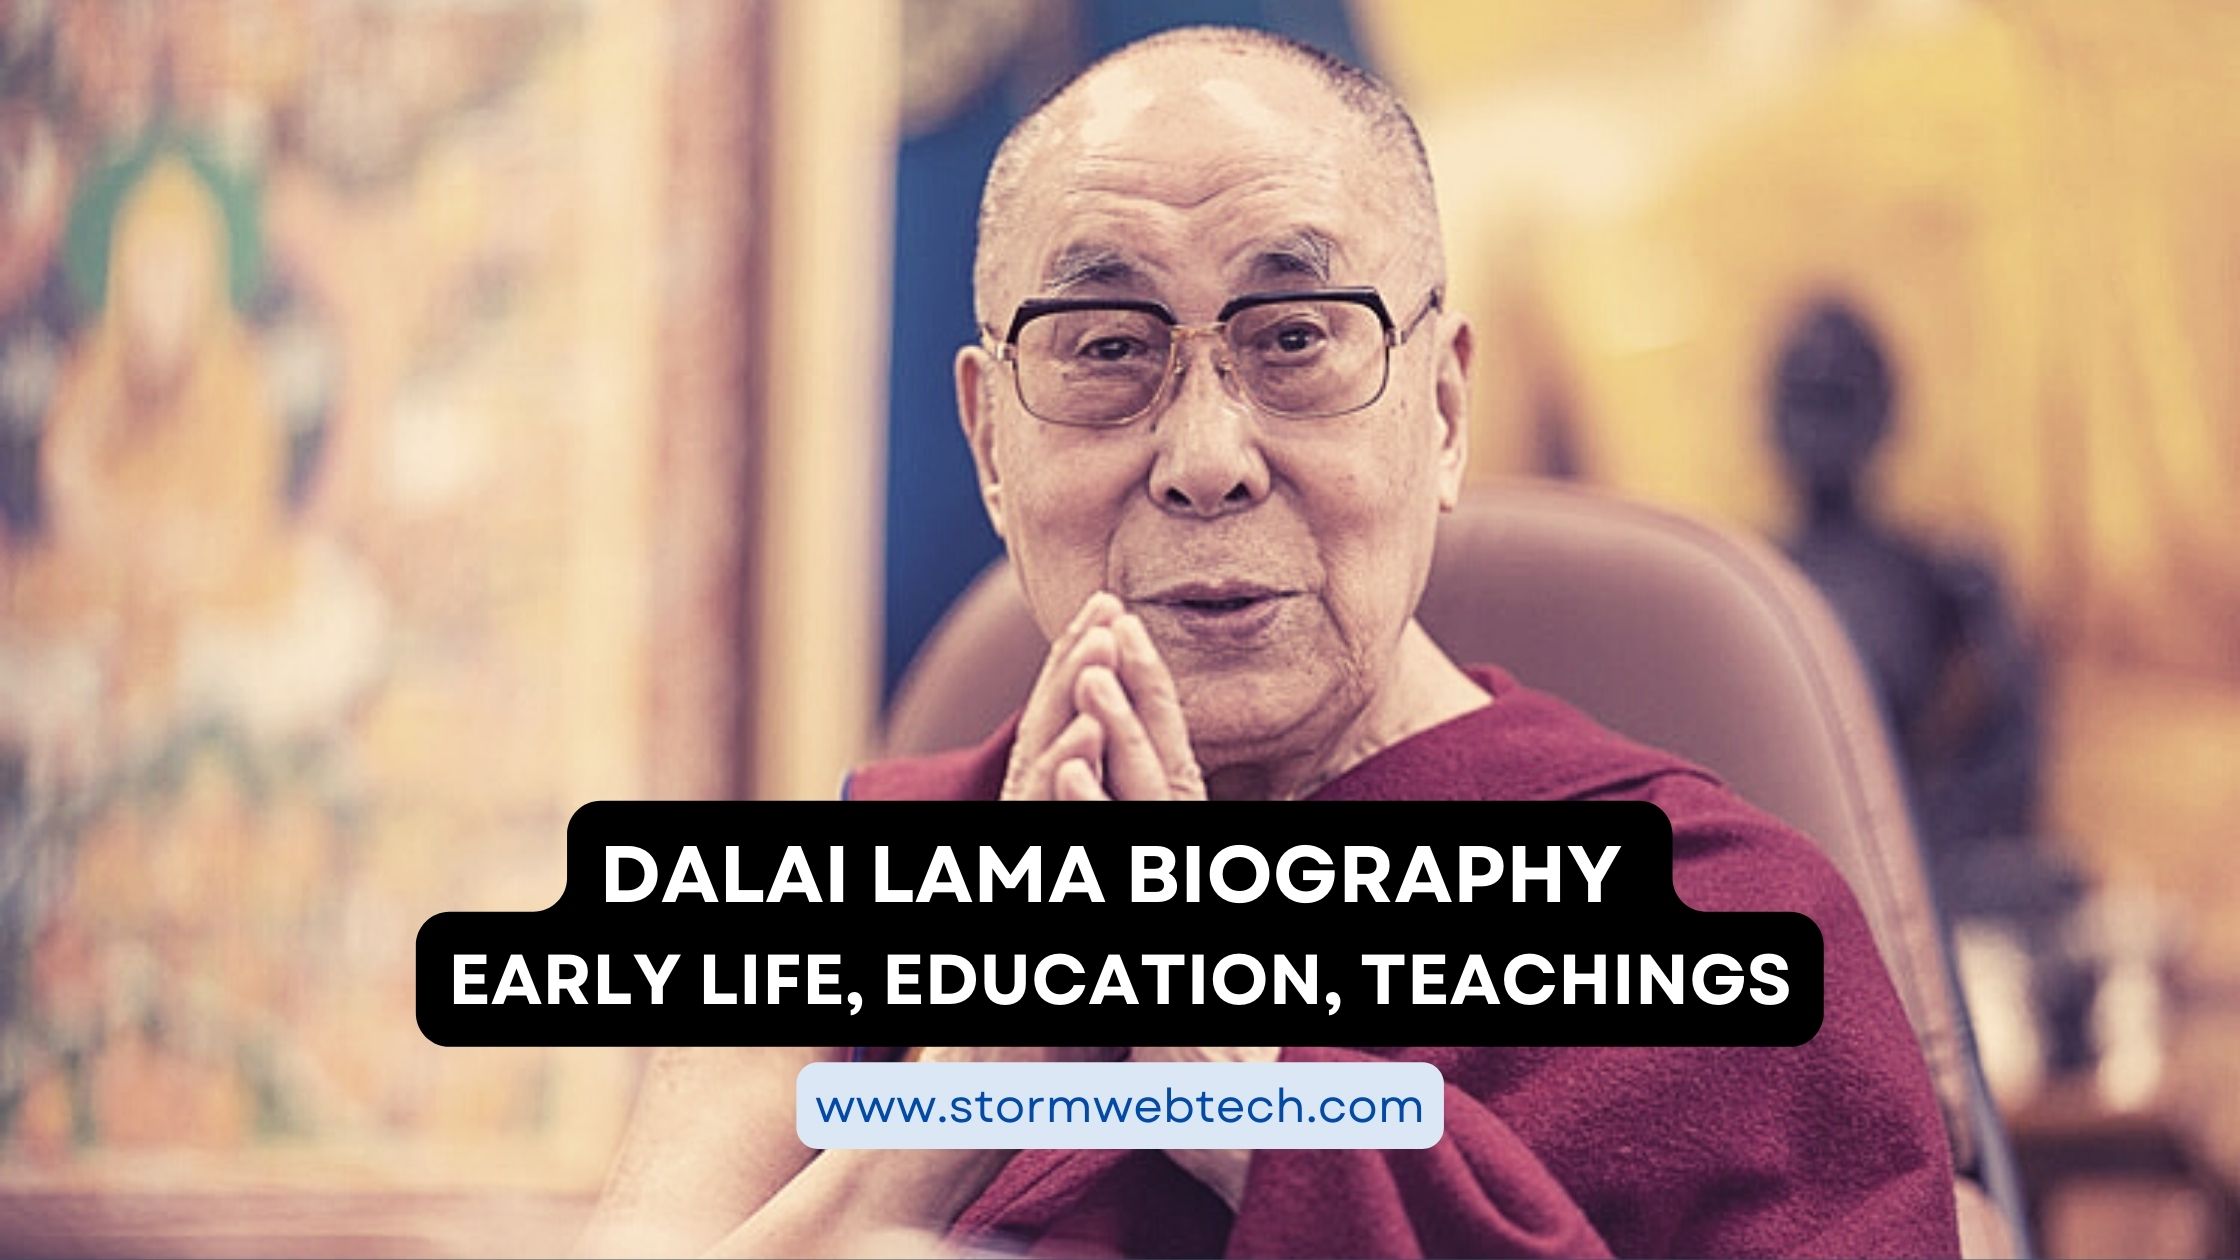 The Dalai Lama Biography : a journey of peace, compassion, spiritual leadership, dalai lama early life, dalai lama education, dalai lama teachings